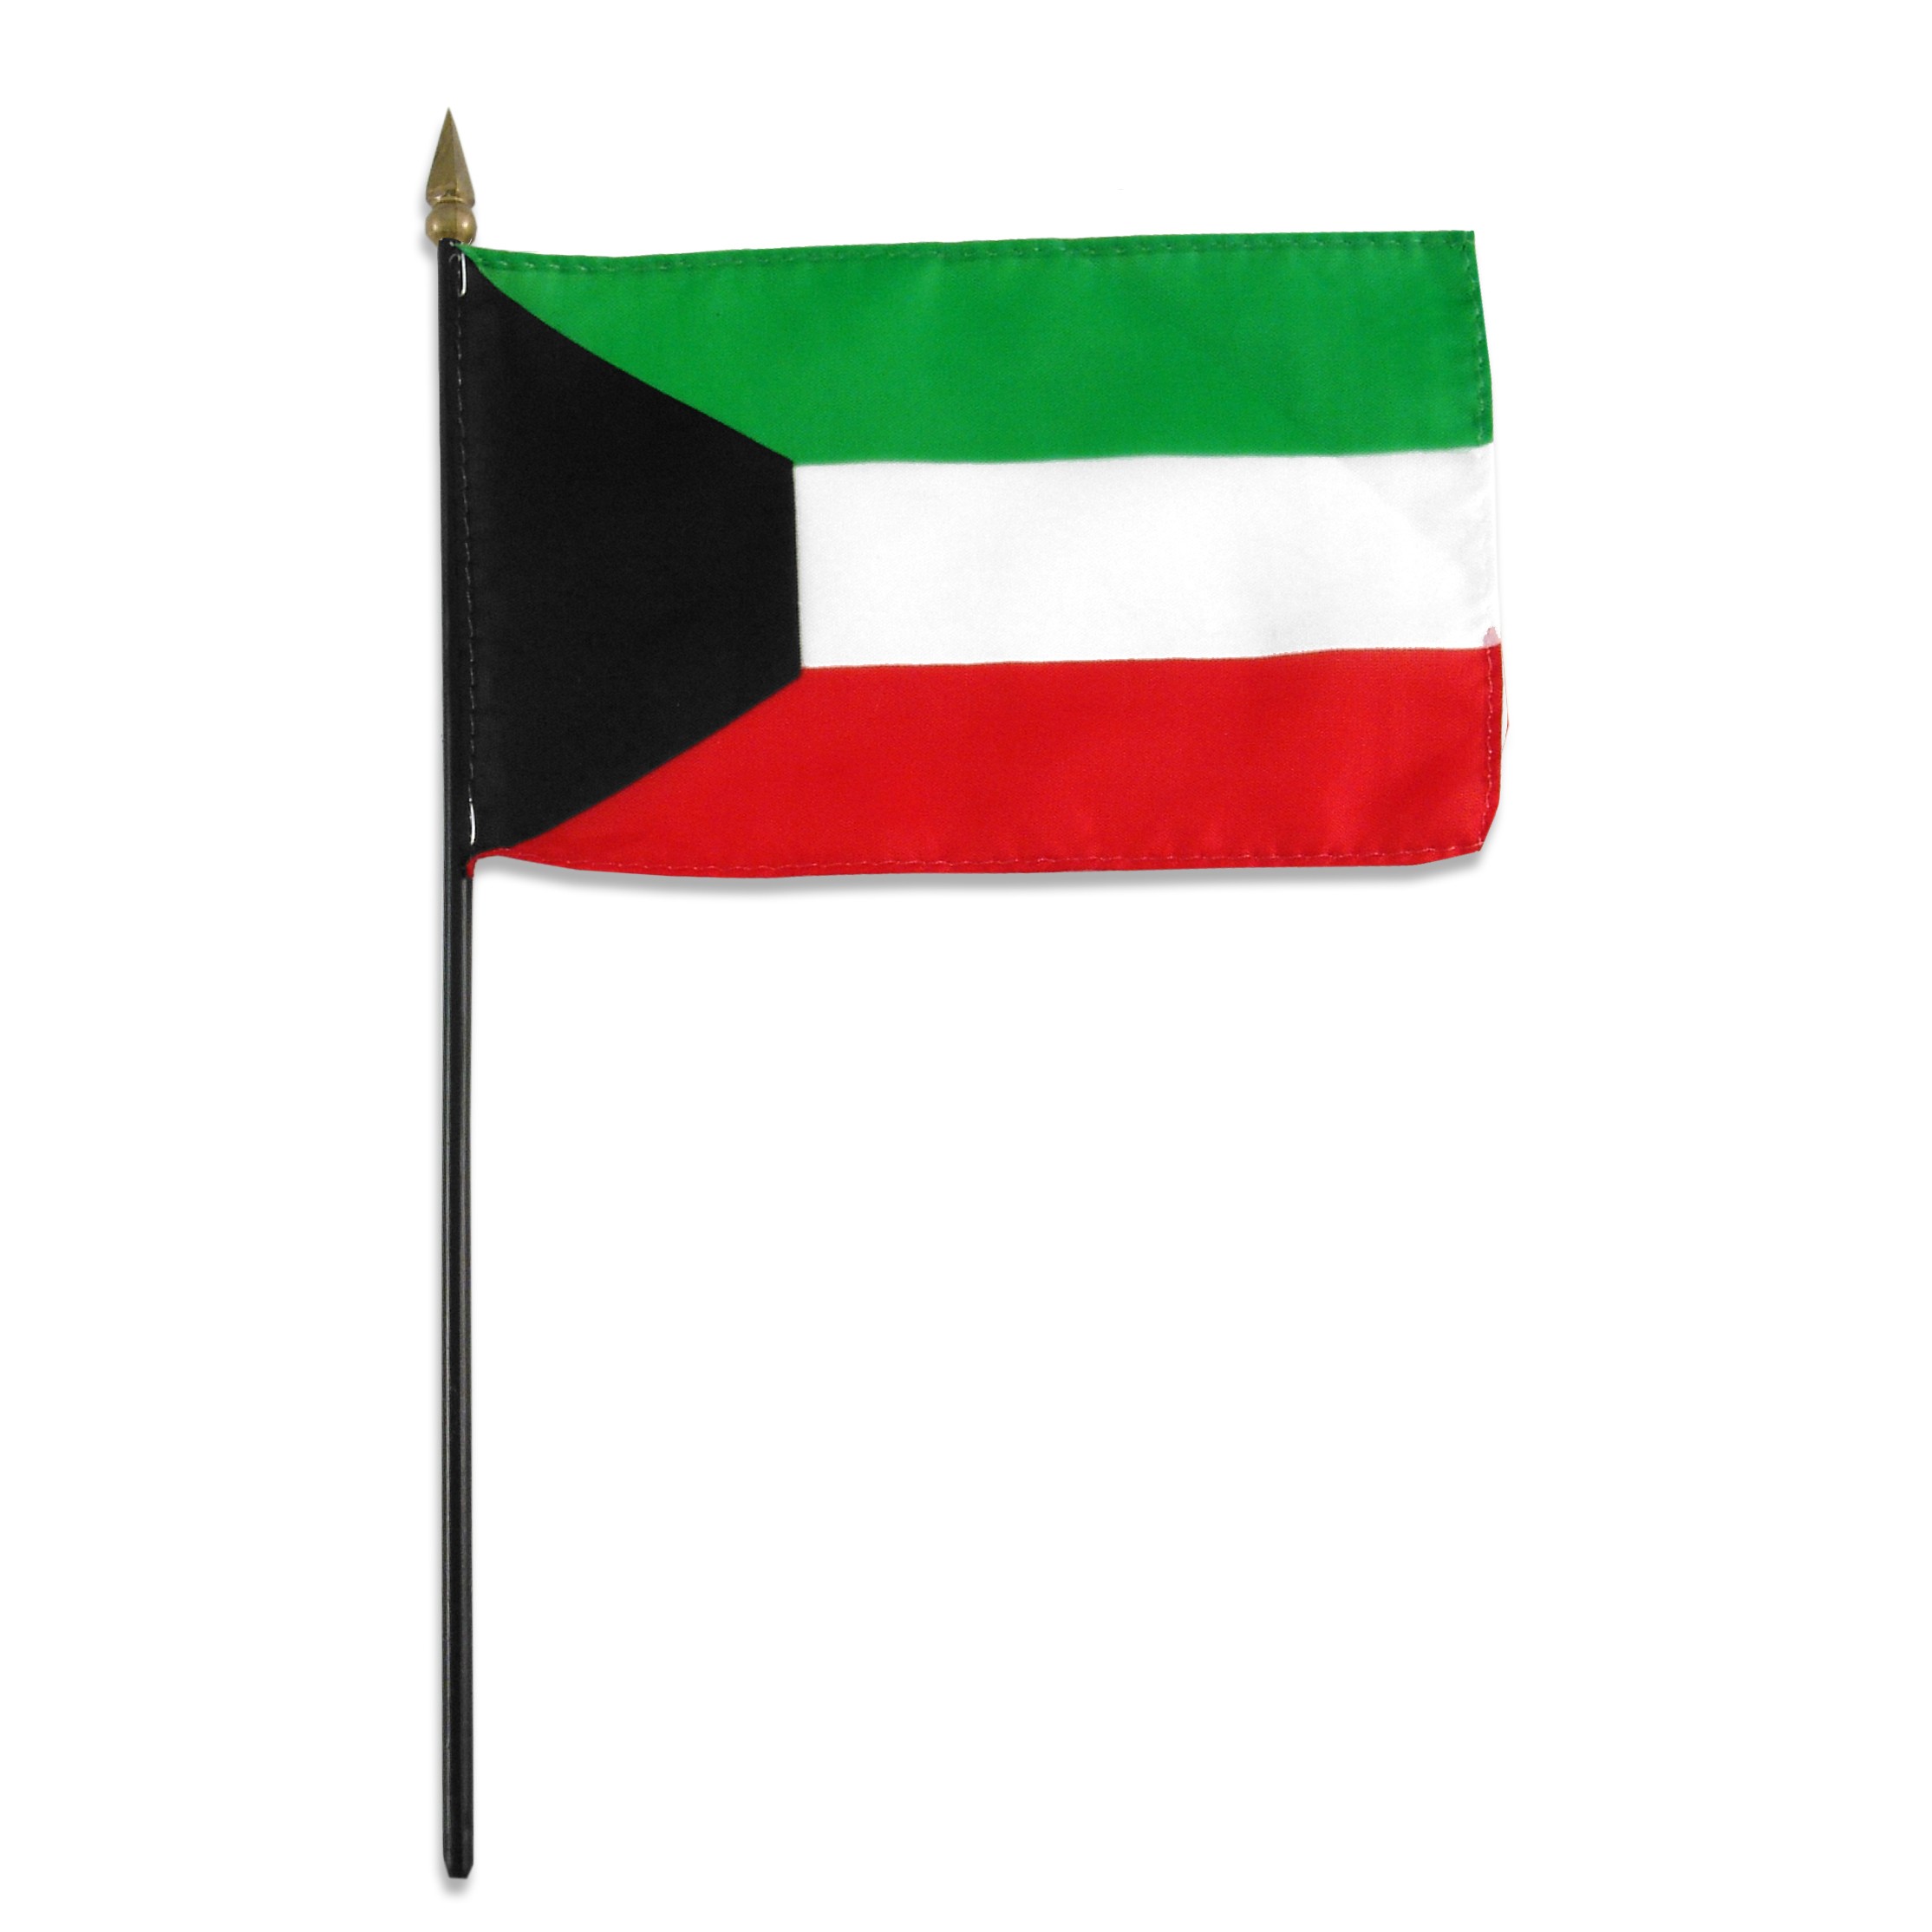 Kuwait flag clipart